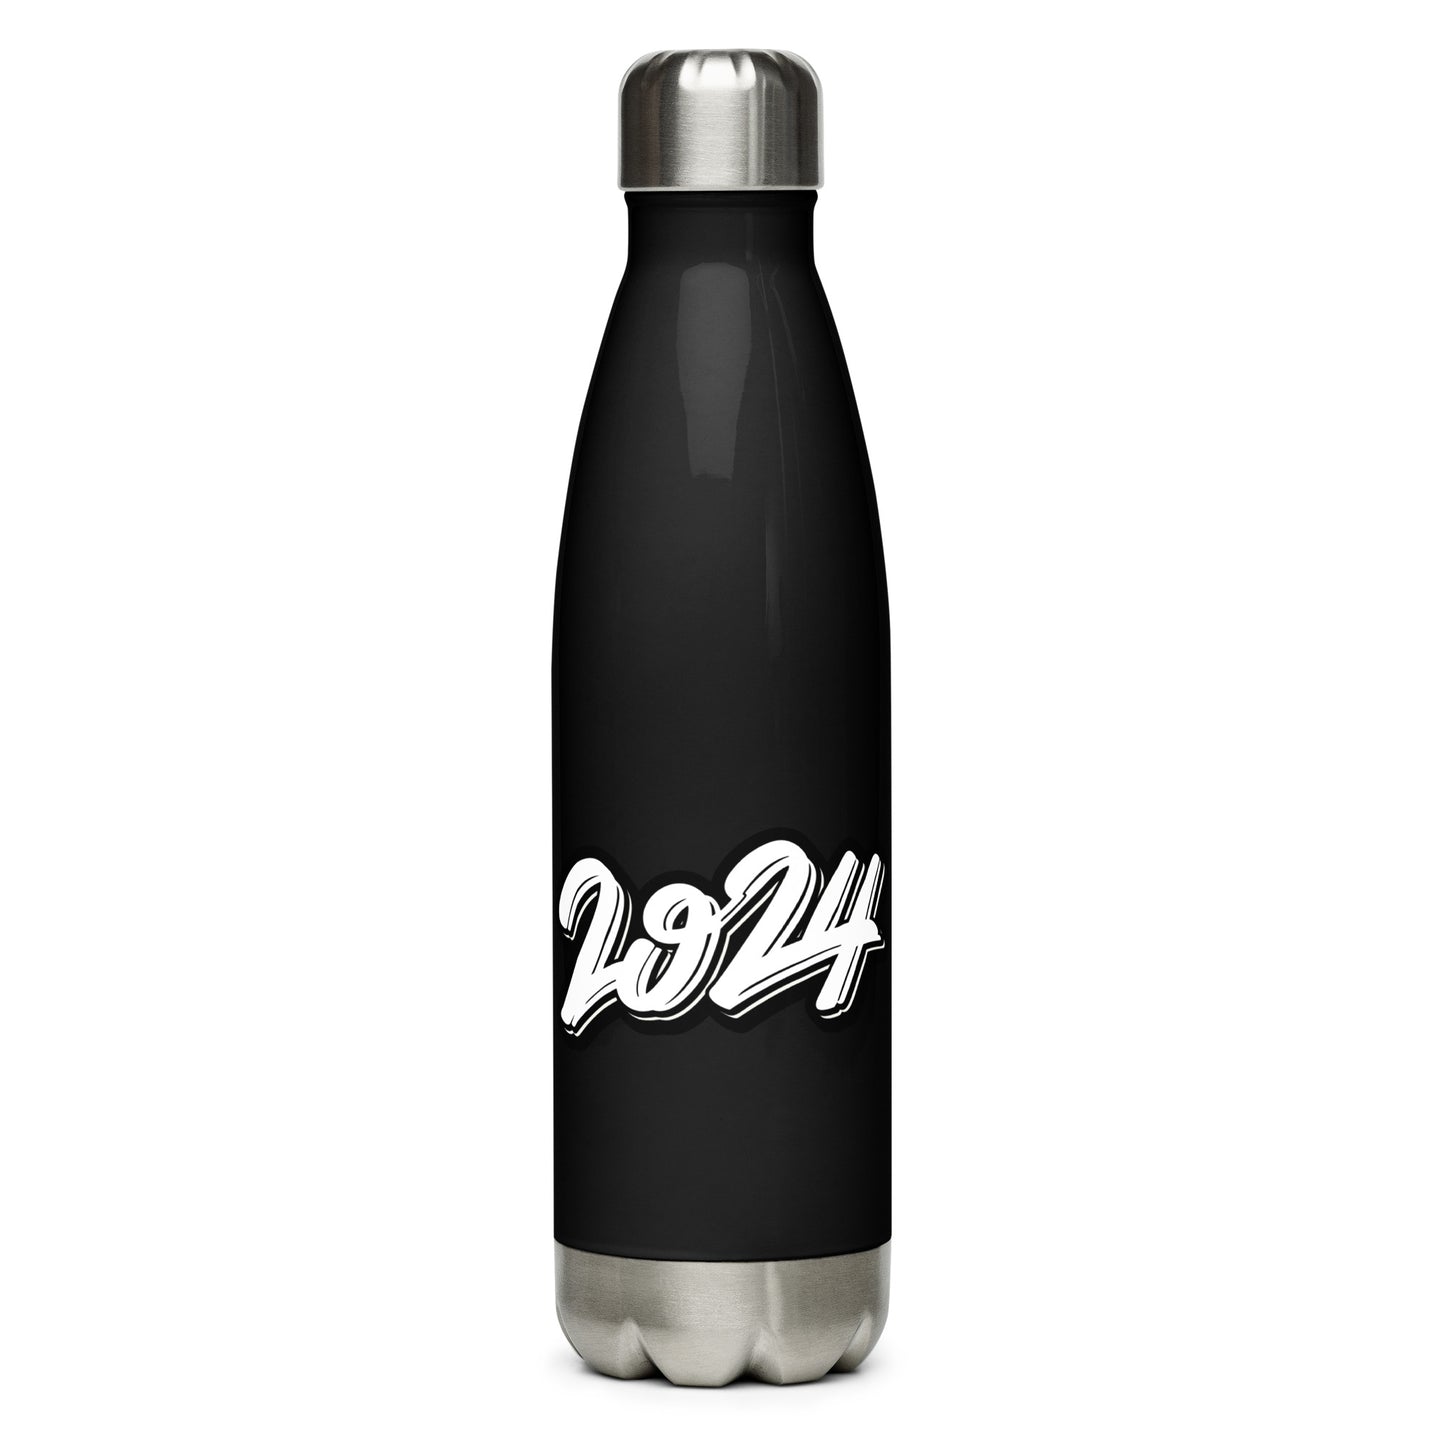 2024 Stainless steel water bottle